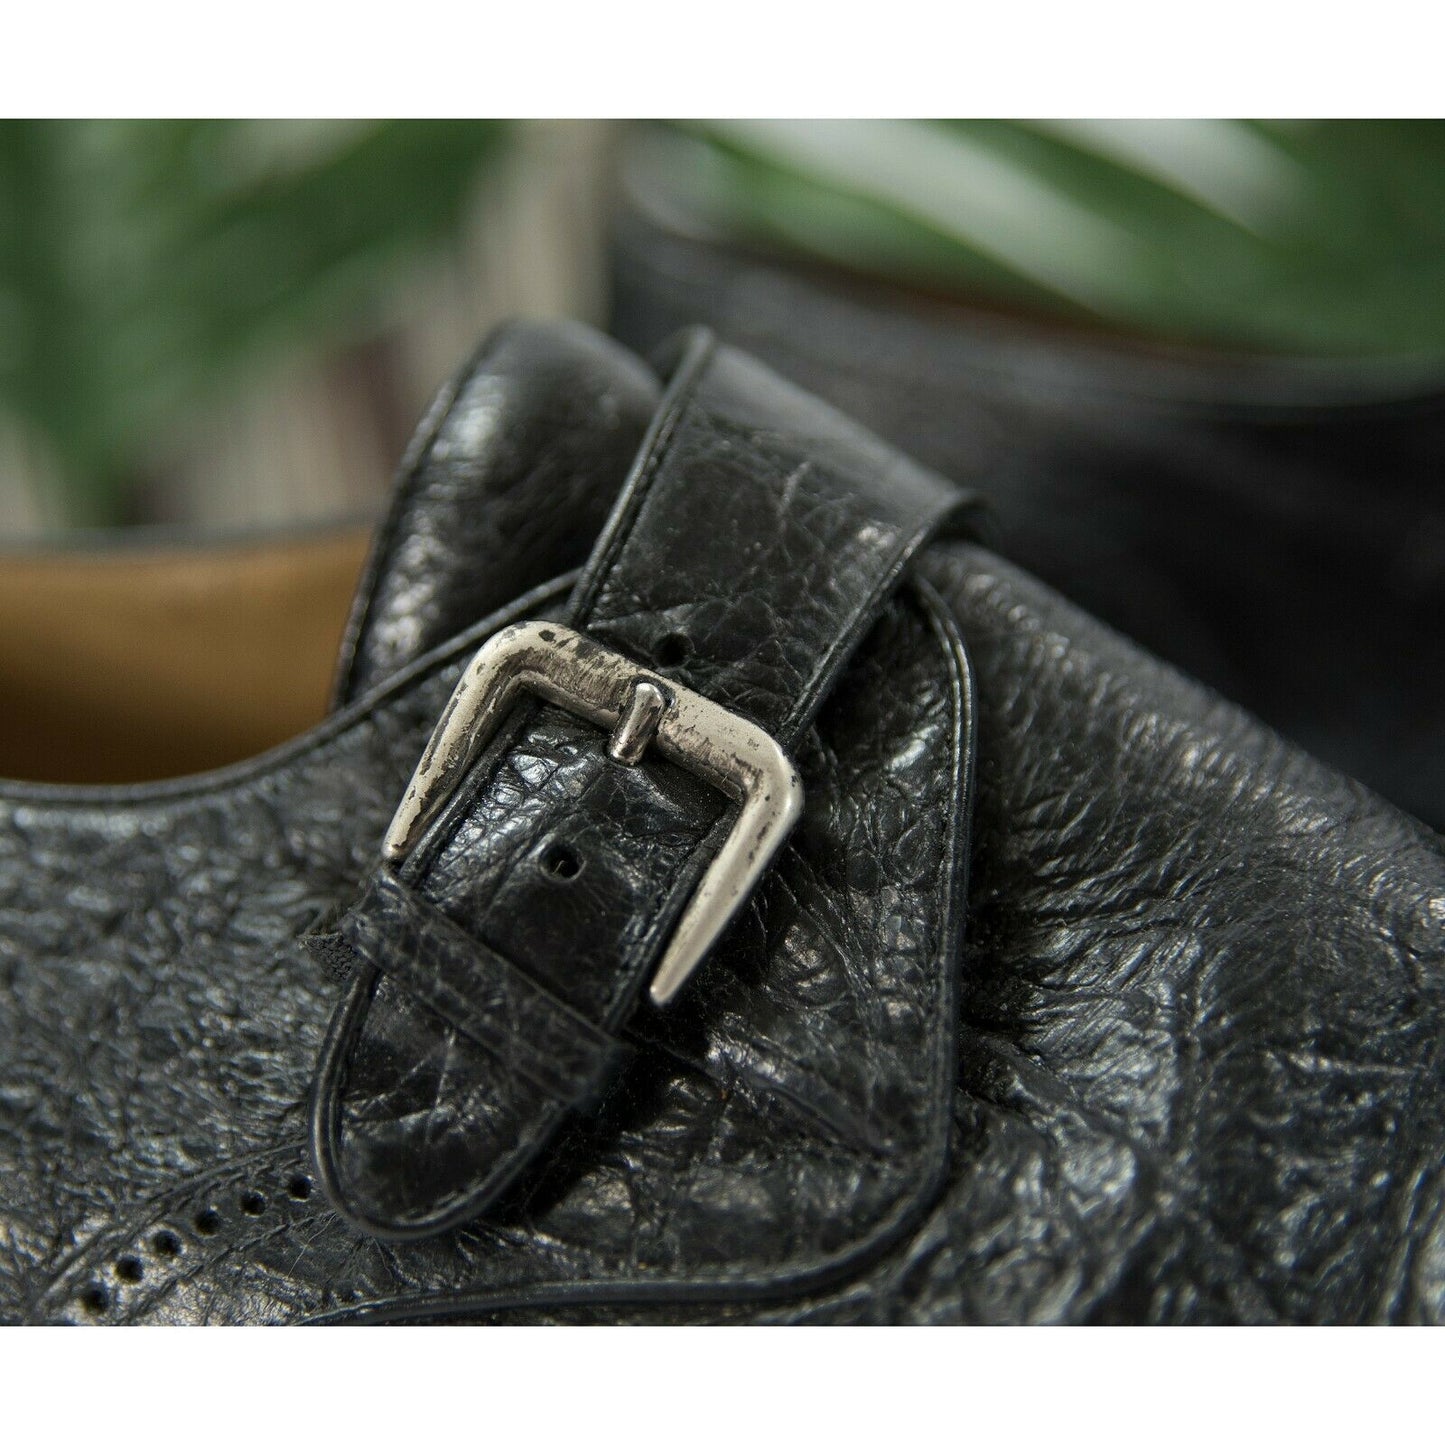 Moreschi Monk Strap Black Leather Oxford Loafer Shoes Size 14